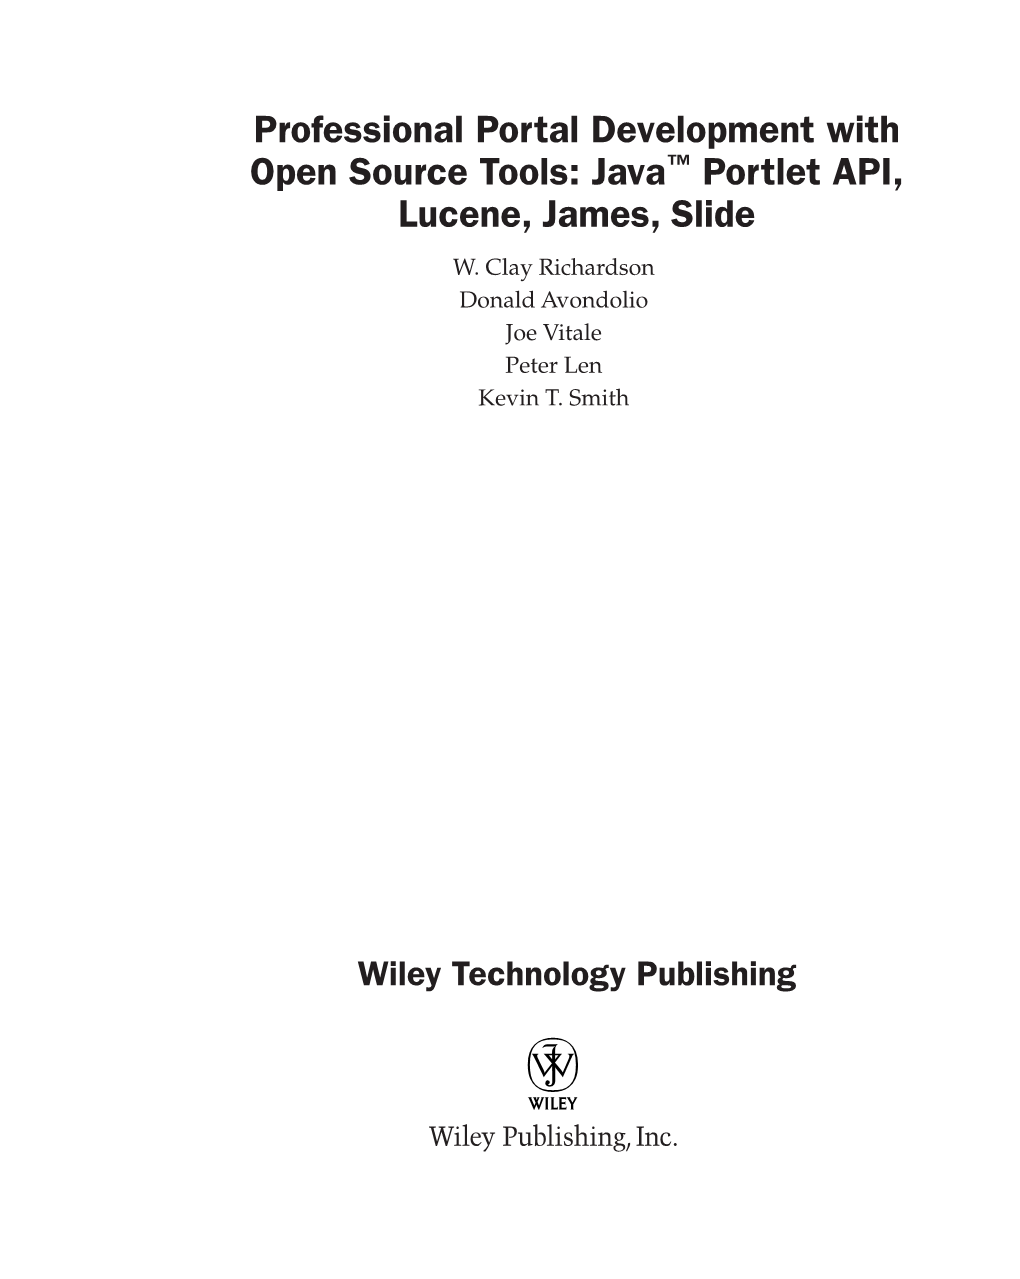 Professional Portal Development with Open Source Tools: Java™ Portlet API, Lucene, James, Slide